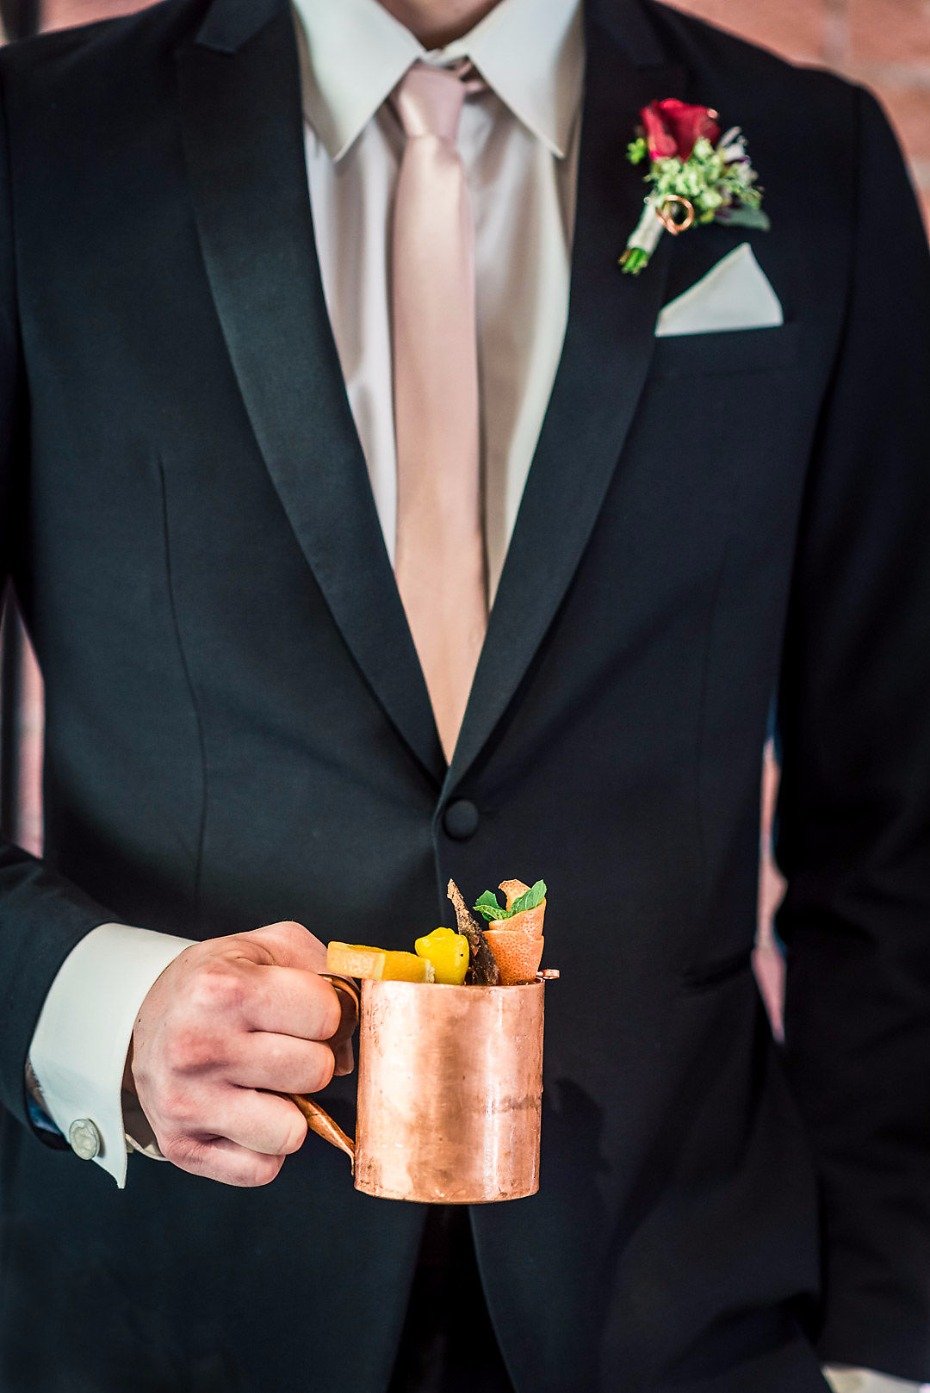 Make the citrus mule your signature wedding drink